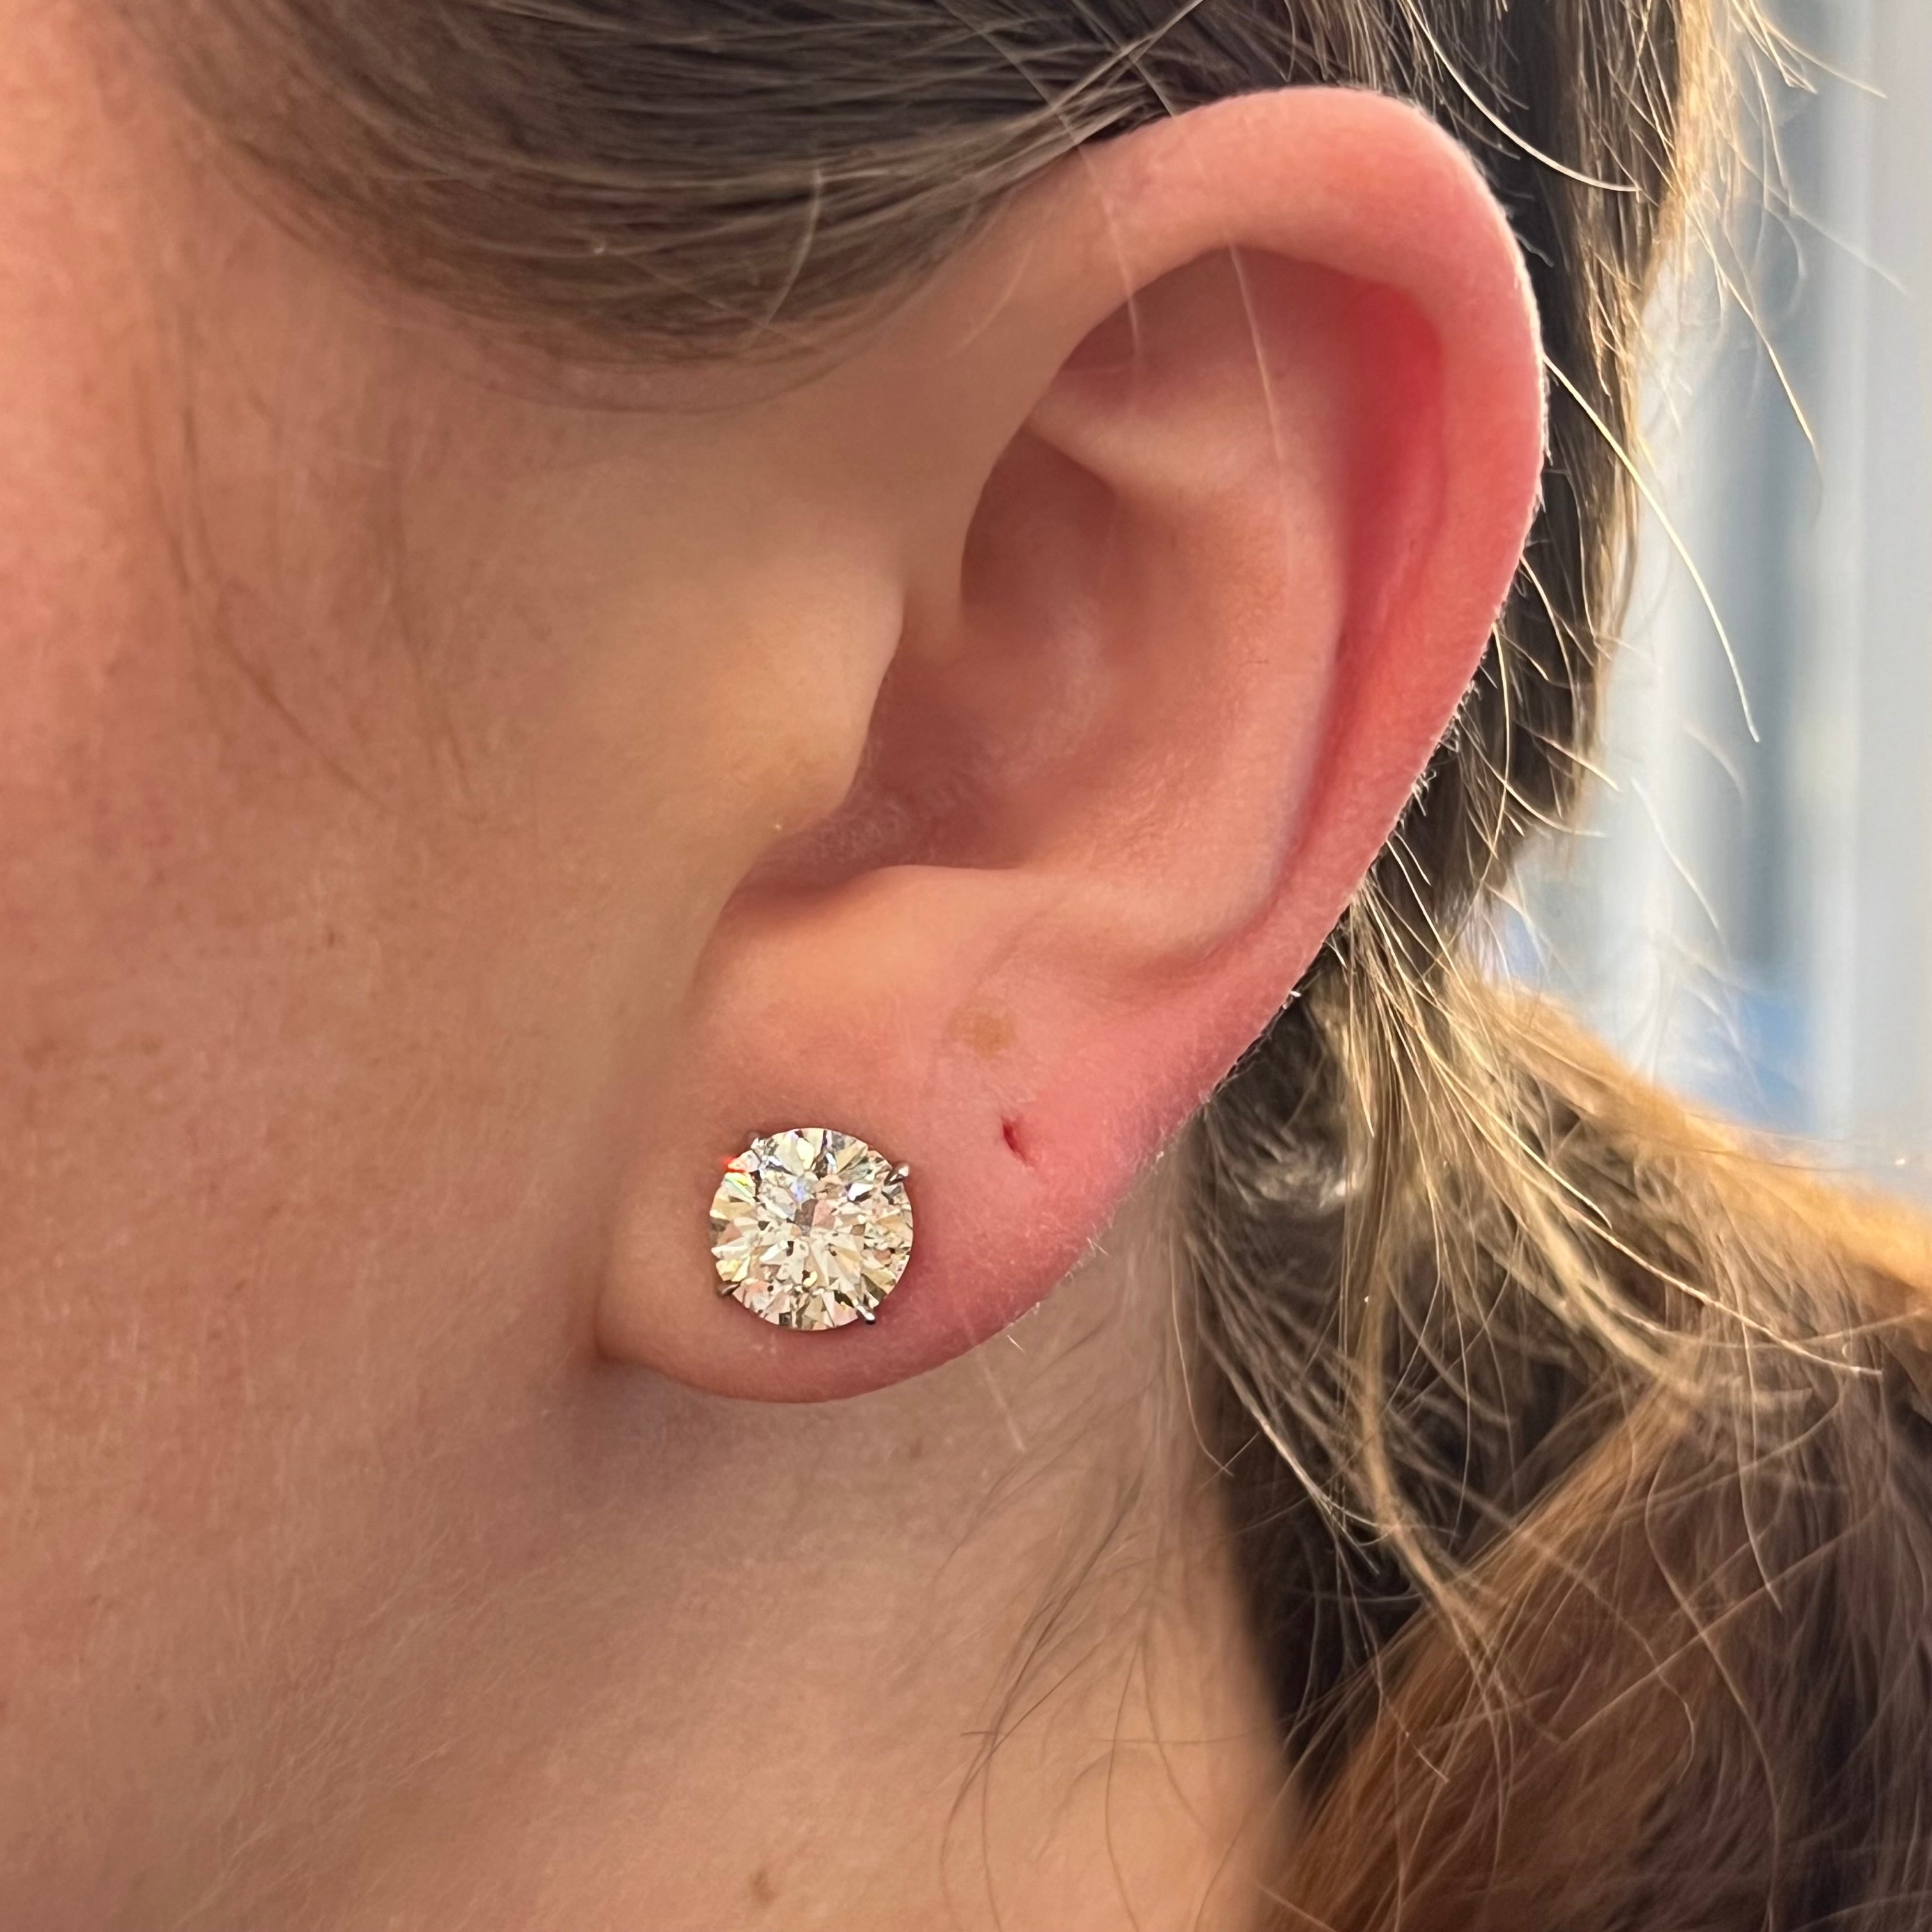 Discover more than 220 1 carat diamond earrings